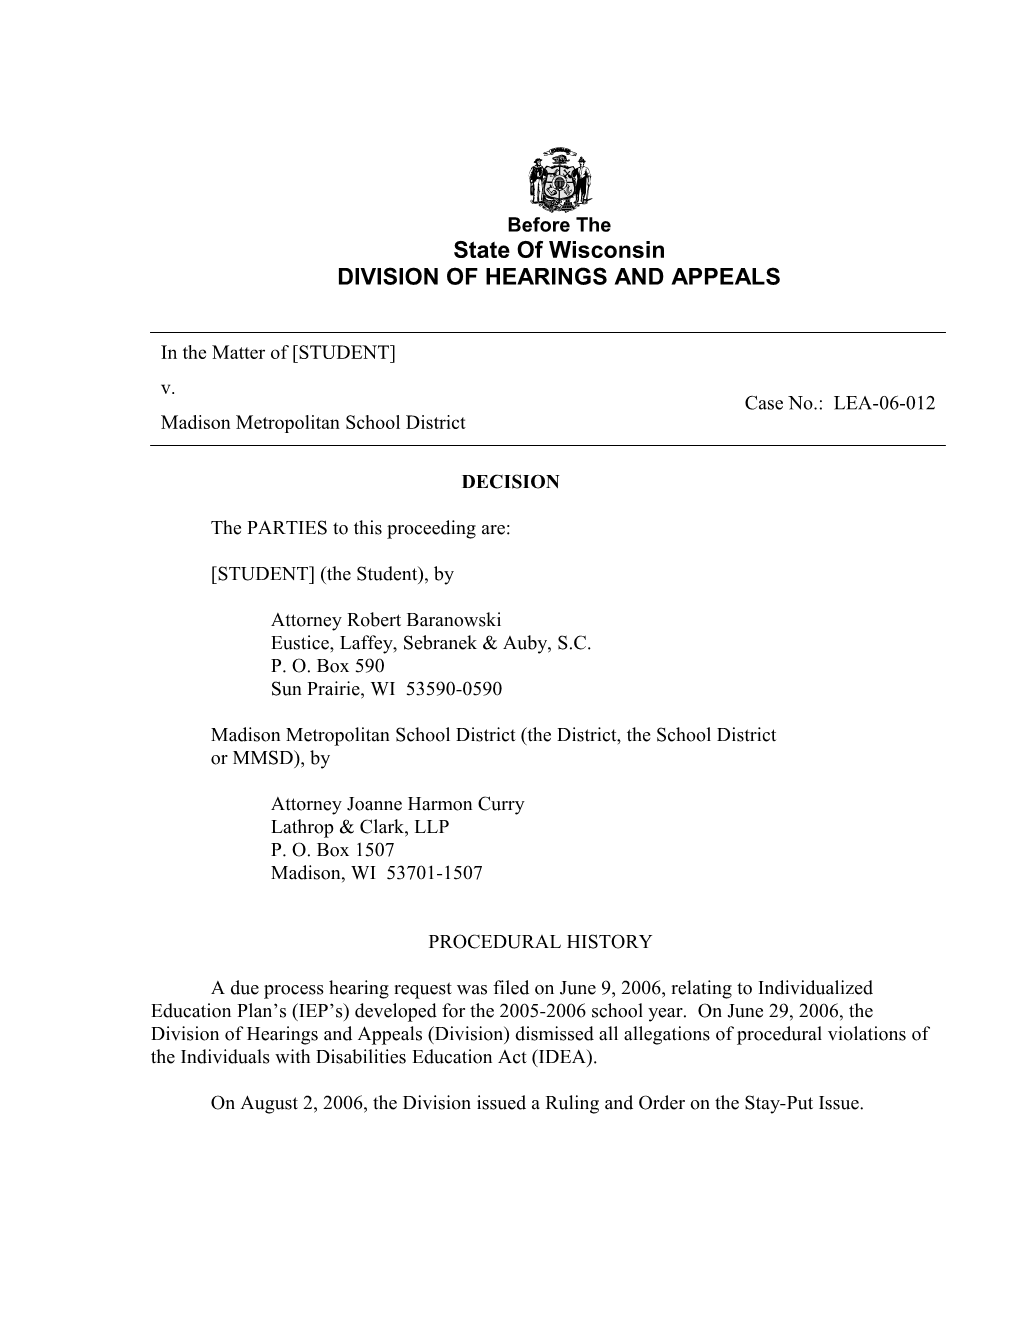 Due Process Hearing Decision LEA 06-012